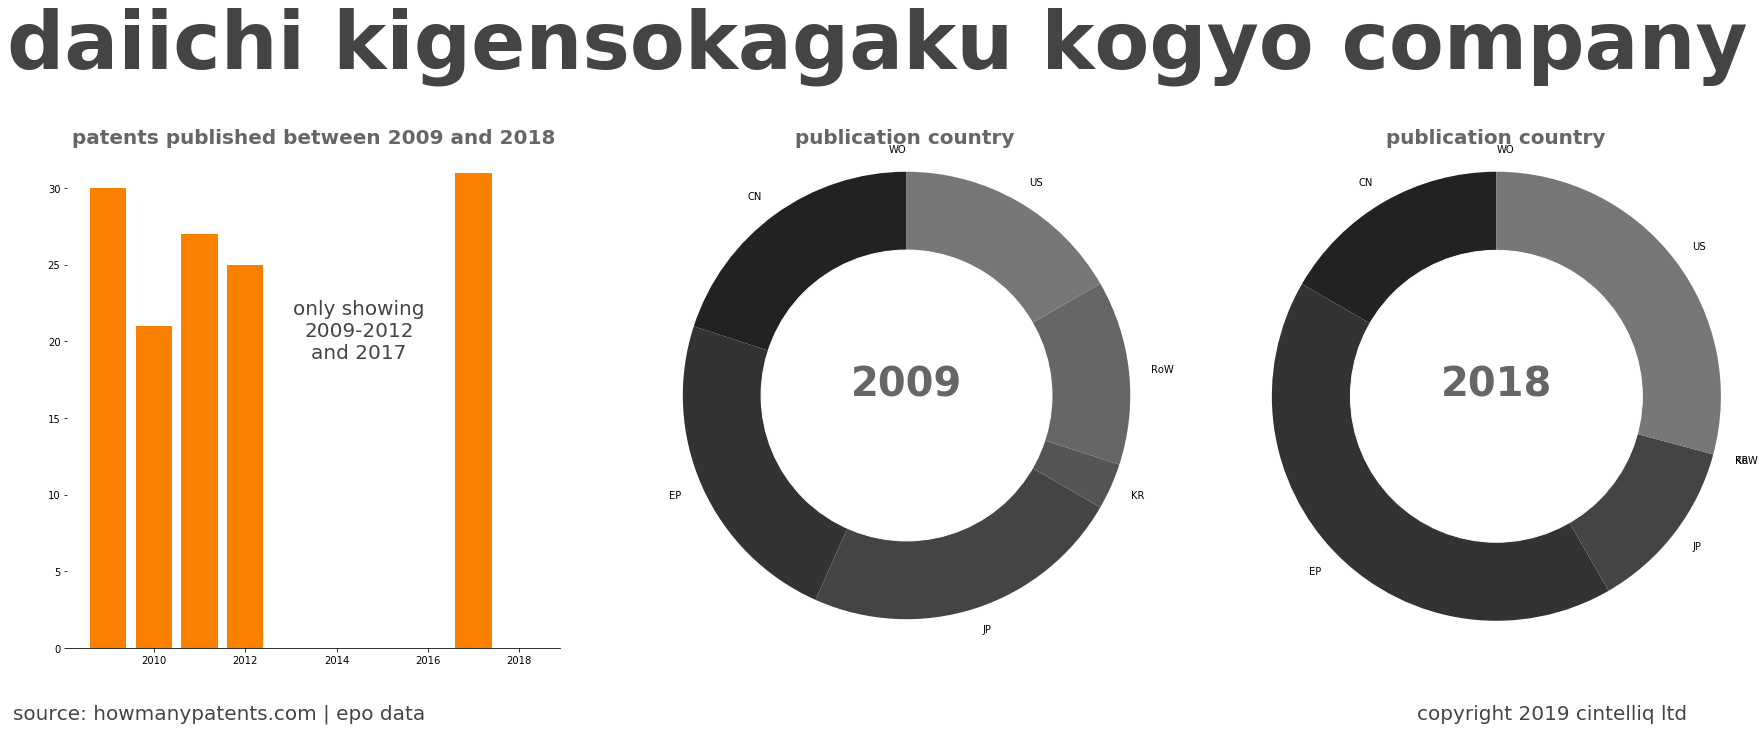 summary of patents for Daiichi Kigensokagaku Kogyo Company